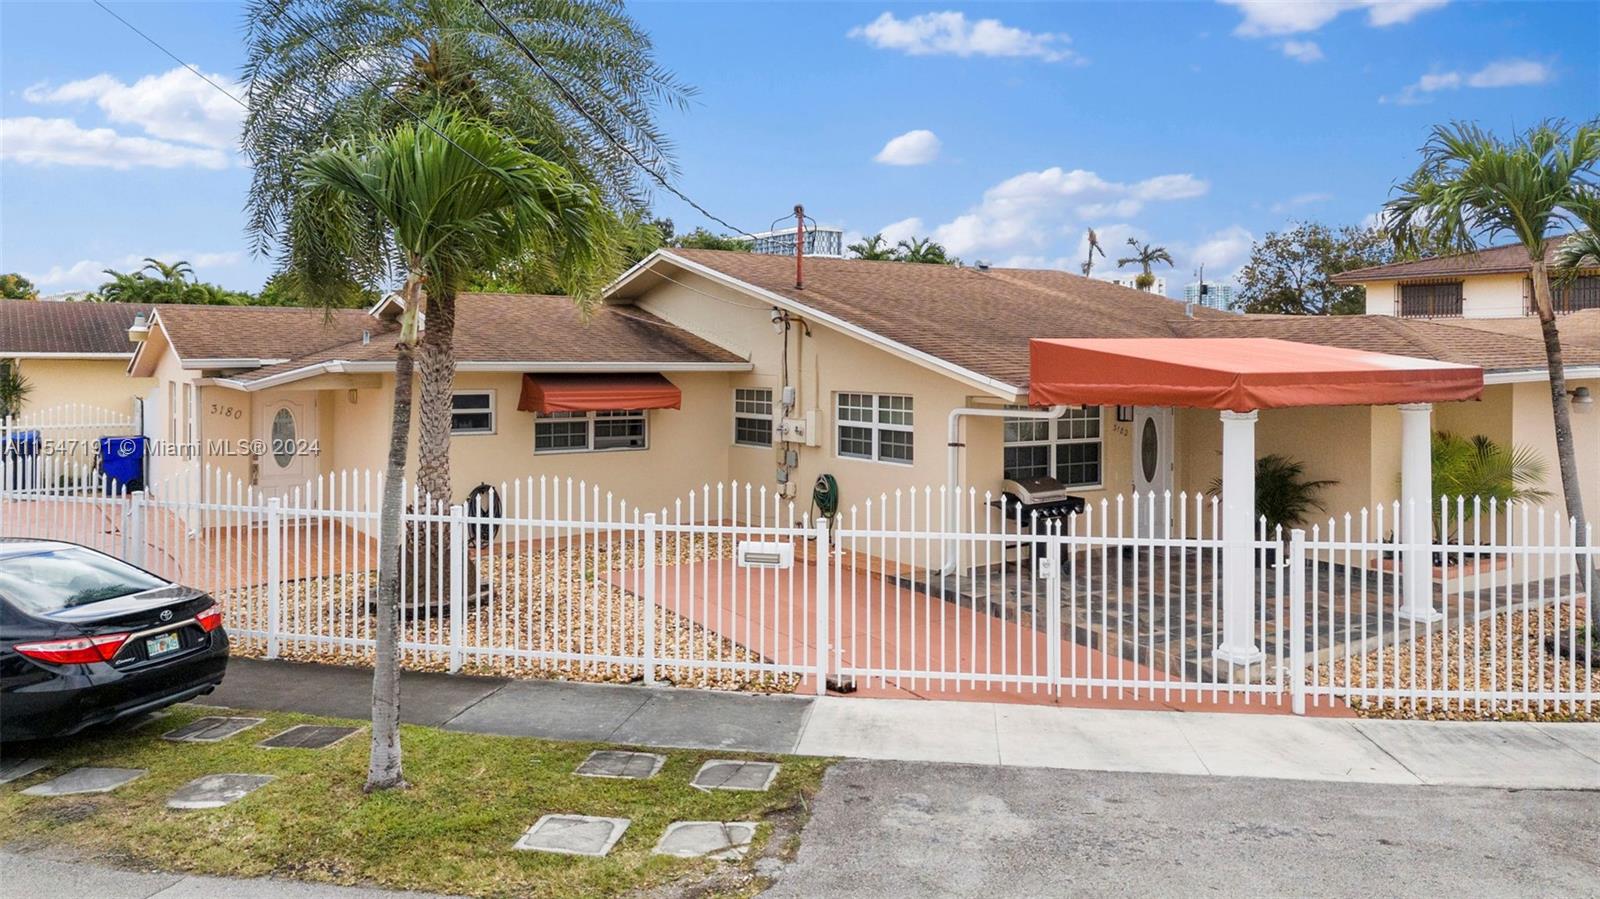 Rental Property at 3180 Sw 25th Ter Ter, Miami, Broward County, Florida -  - $950,000 MO.